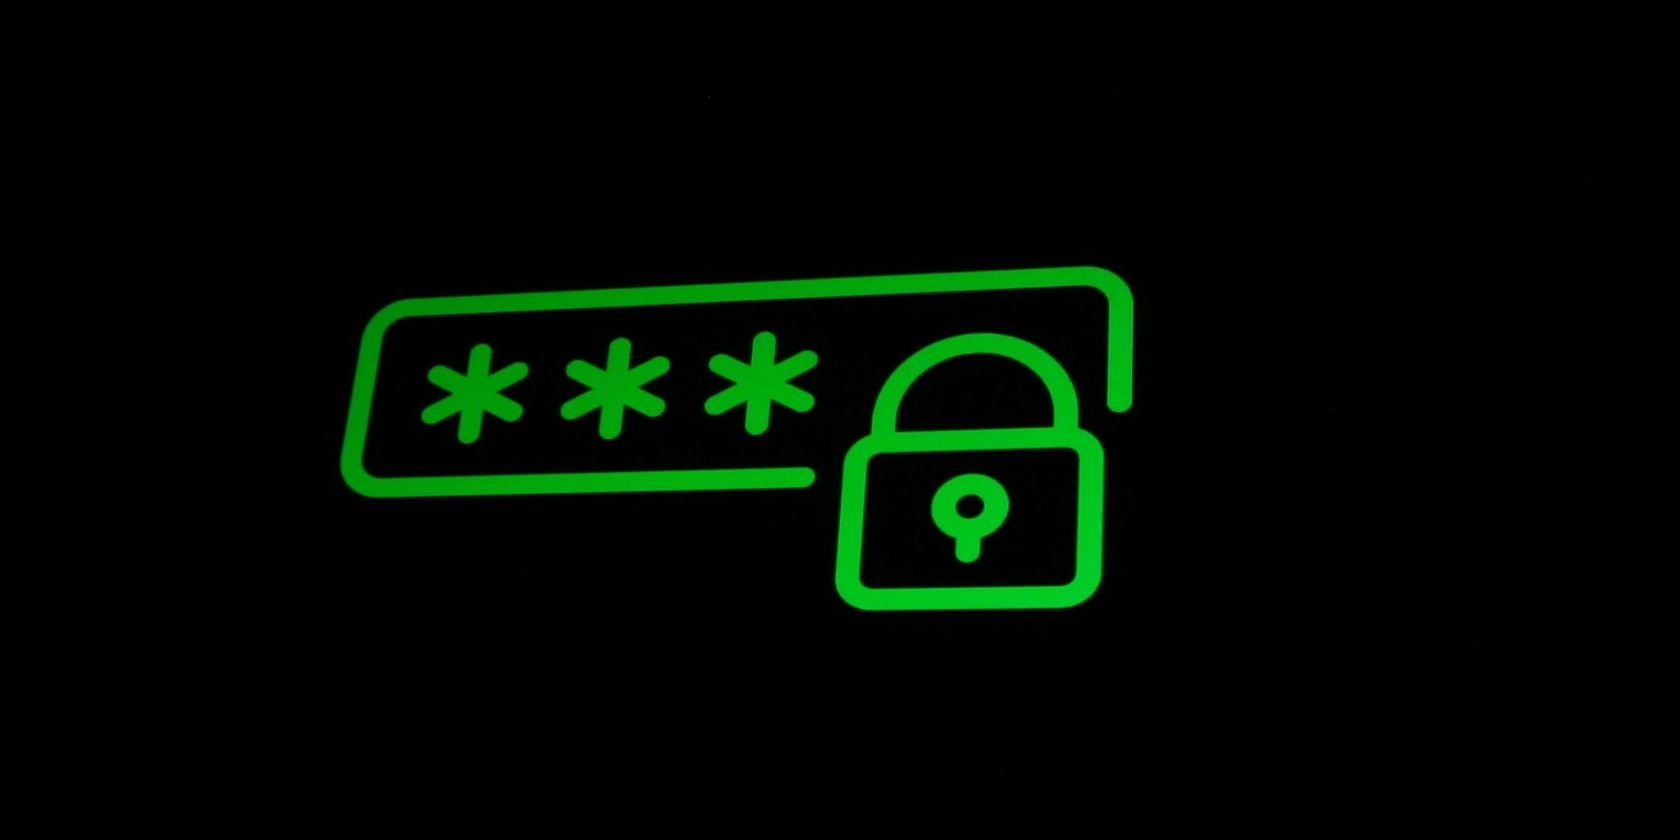 Password Field With Lock Symbol on It